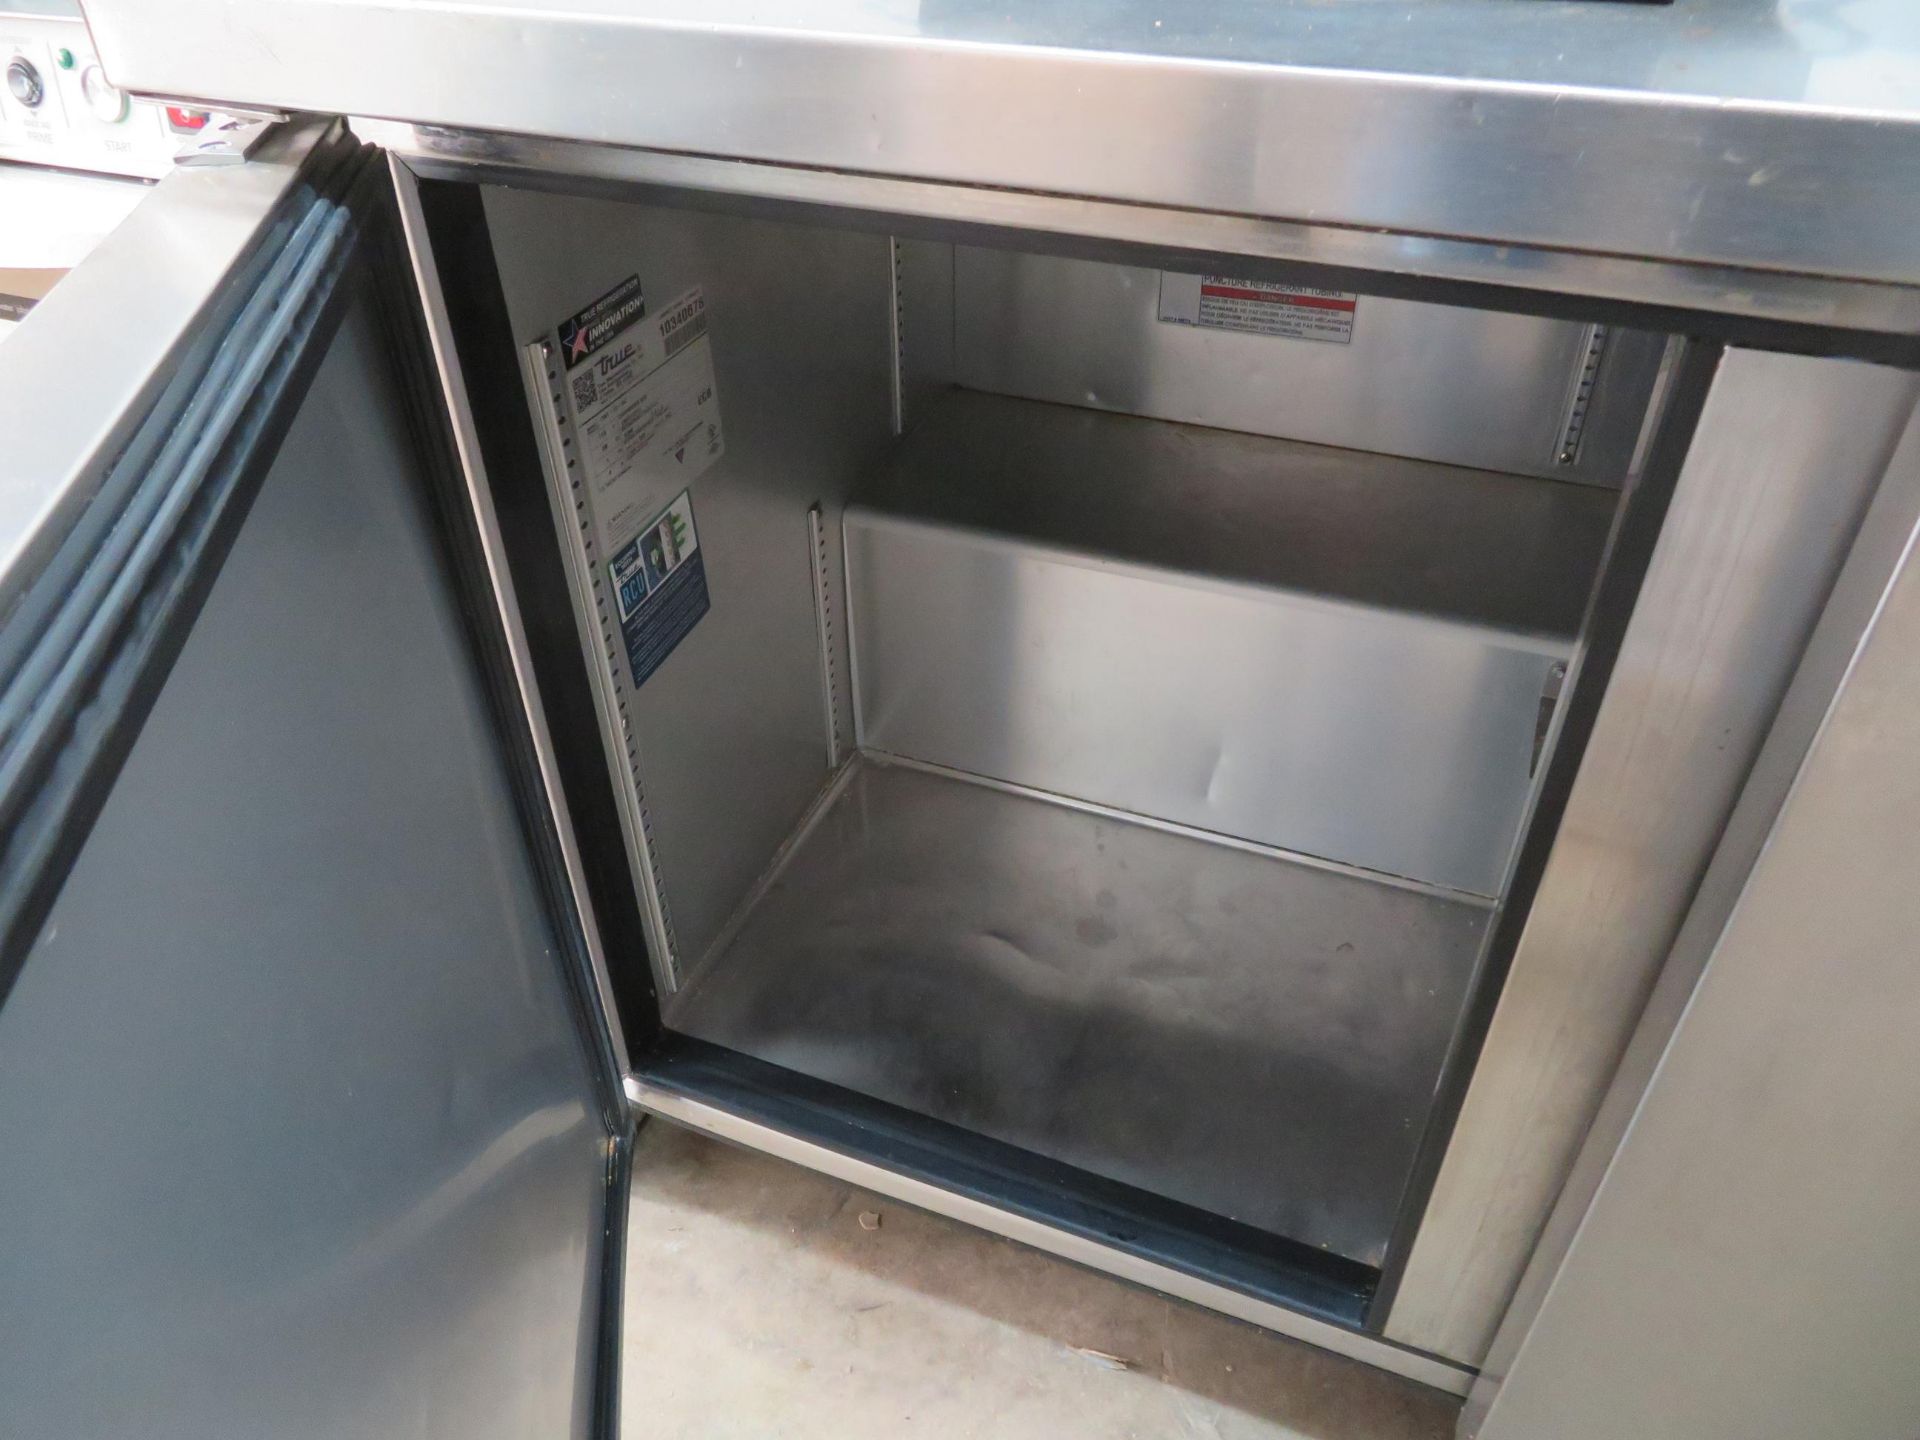 TRUE 3 door undercounter refrigerator, Mod # TWT-72-HC, approx. 72"w x 30"d x 36"h - Image 2 of 3